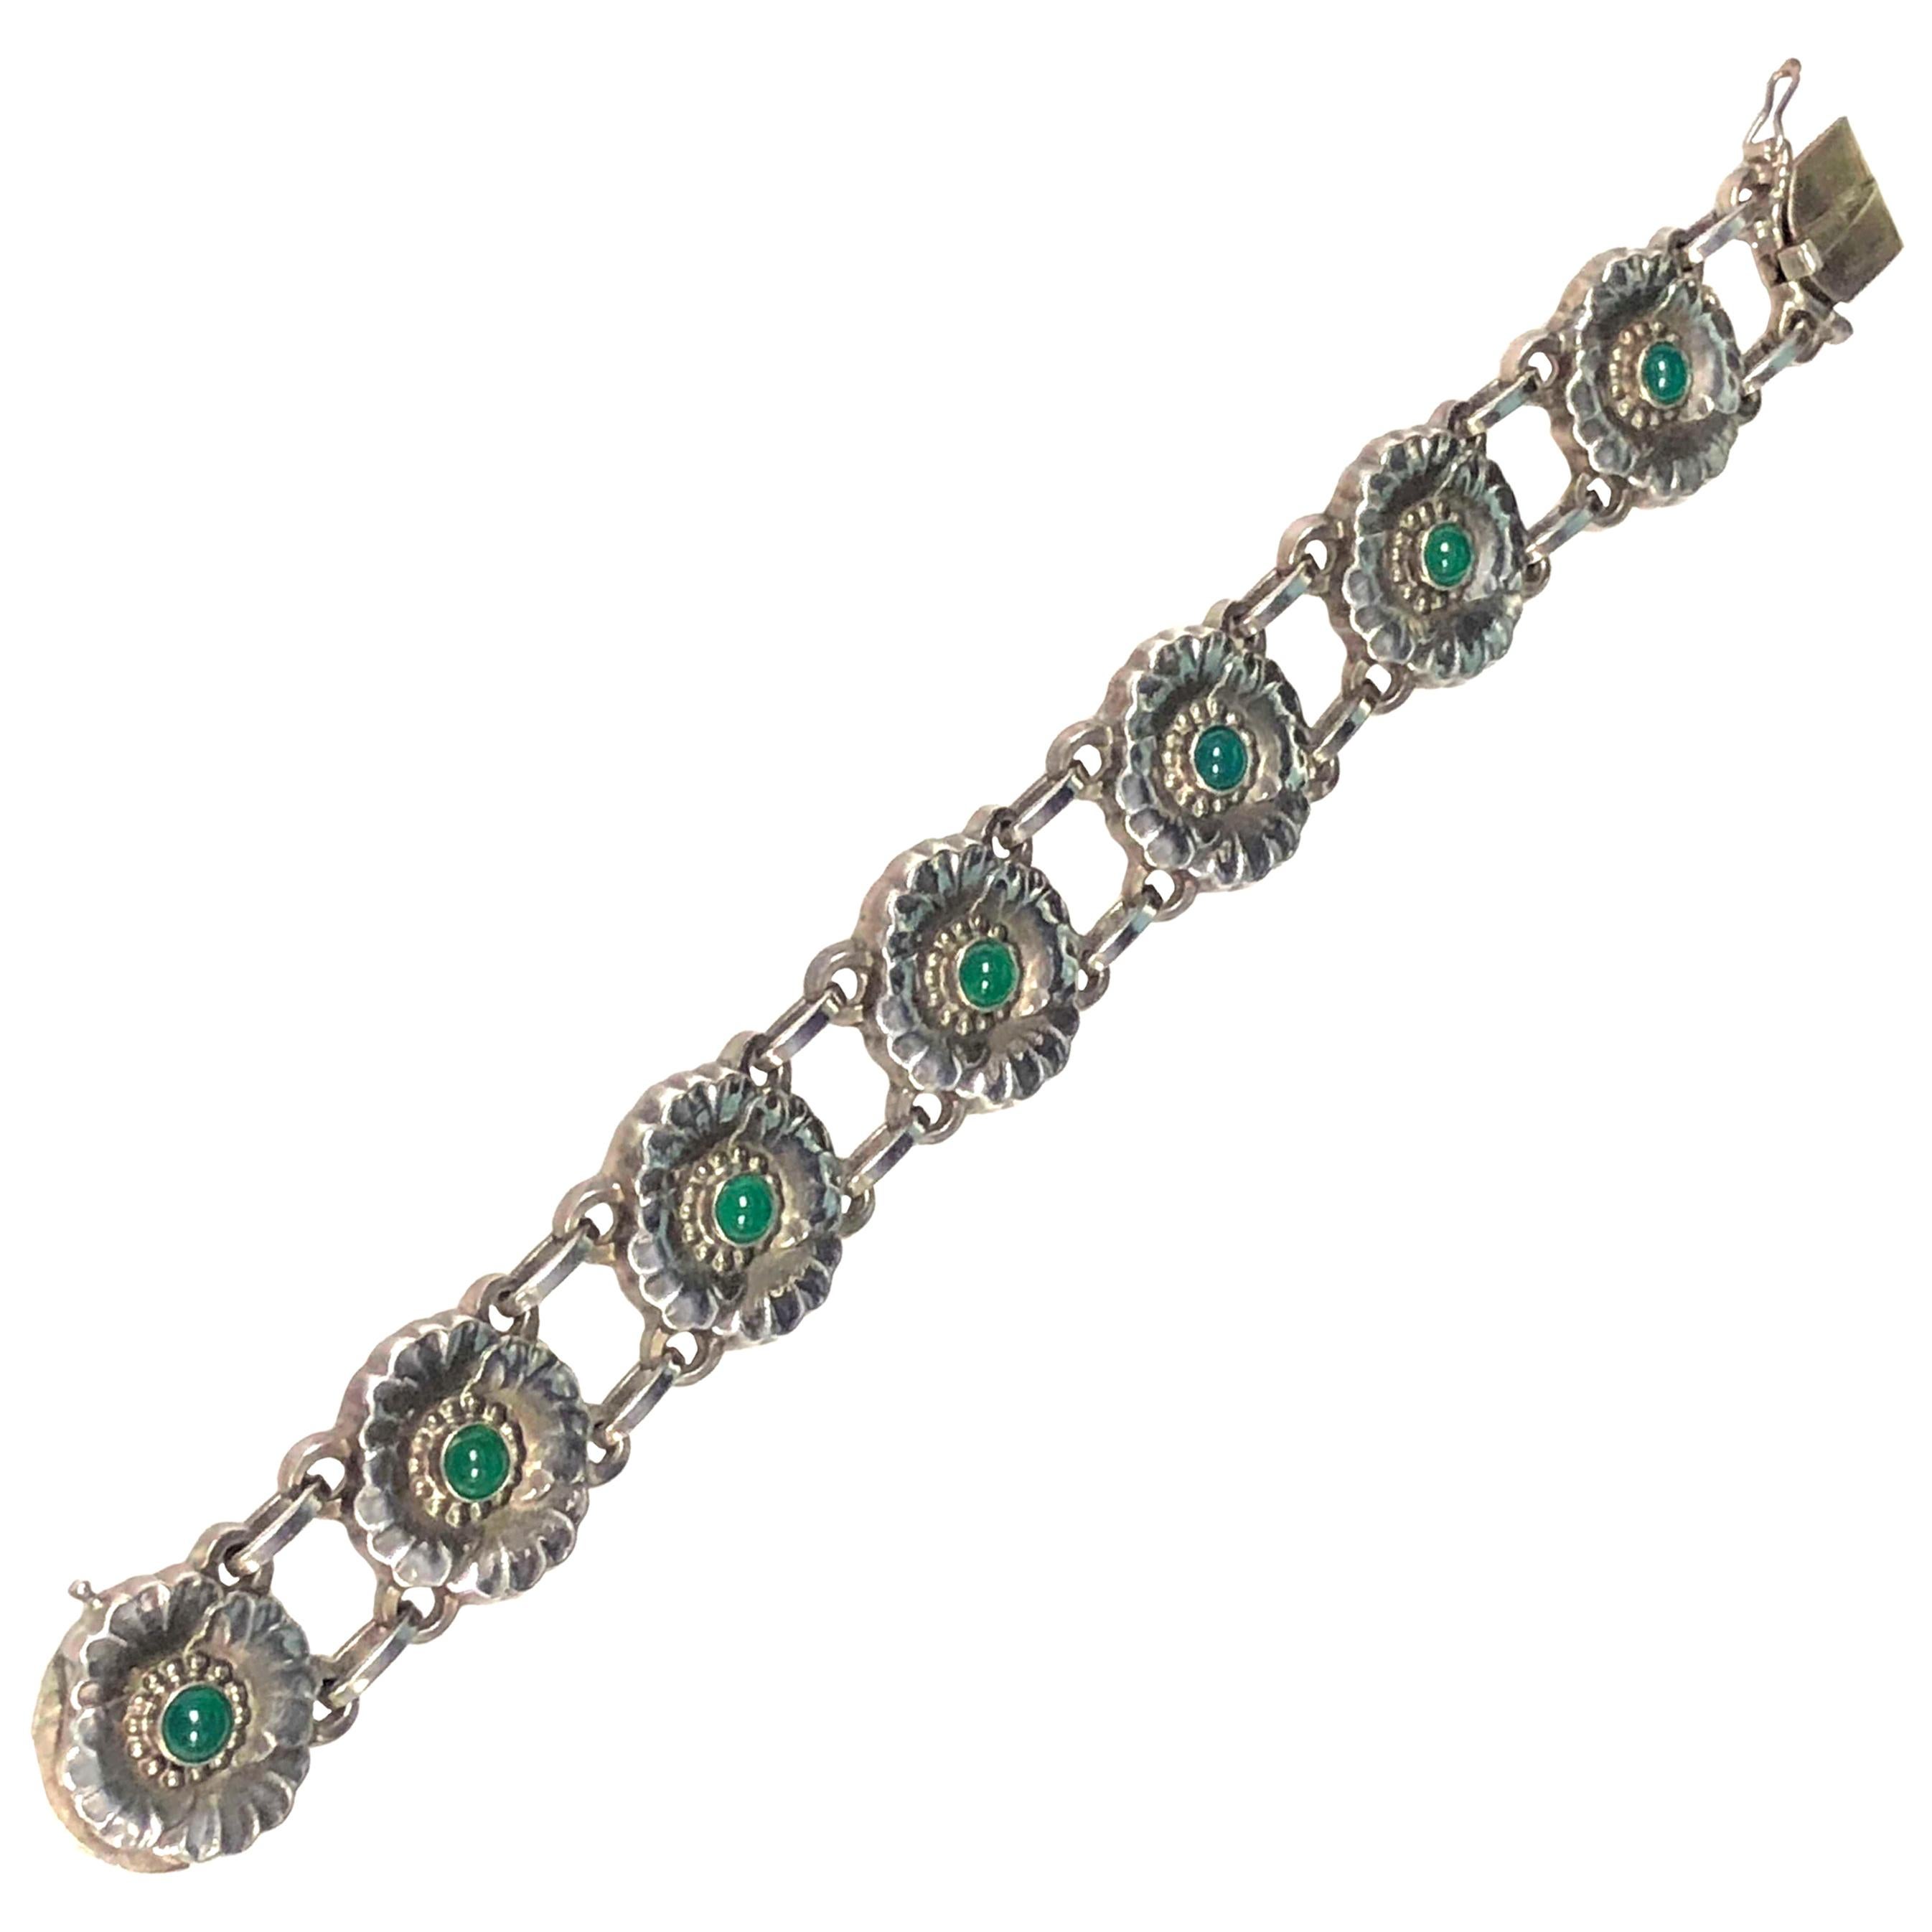 George Jensen Denmark Antique #32 Gem Stone Bracelet